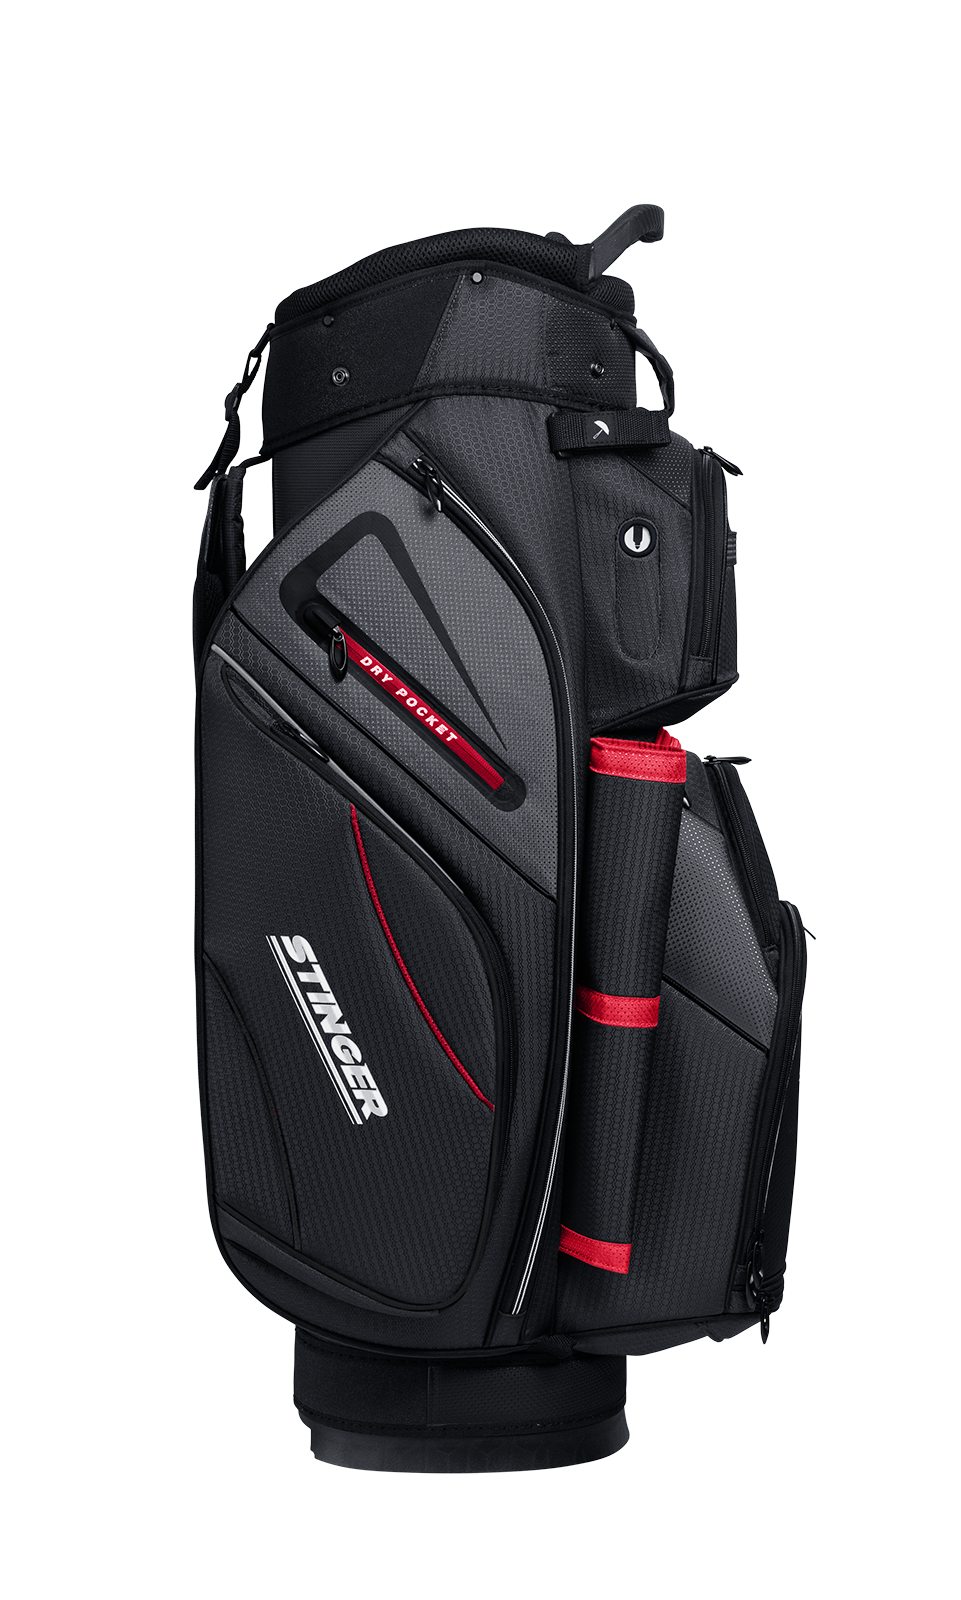 Stinger Premium Golf Bag - Black/Red - BAGS - Stinger Golf Products